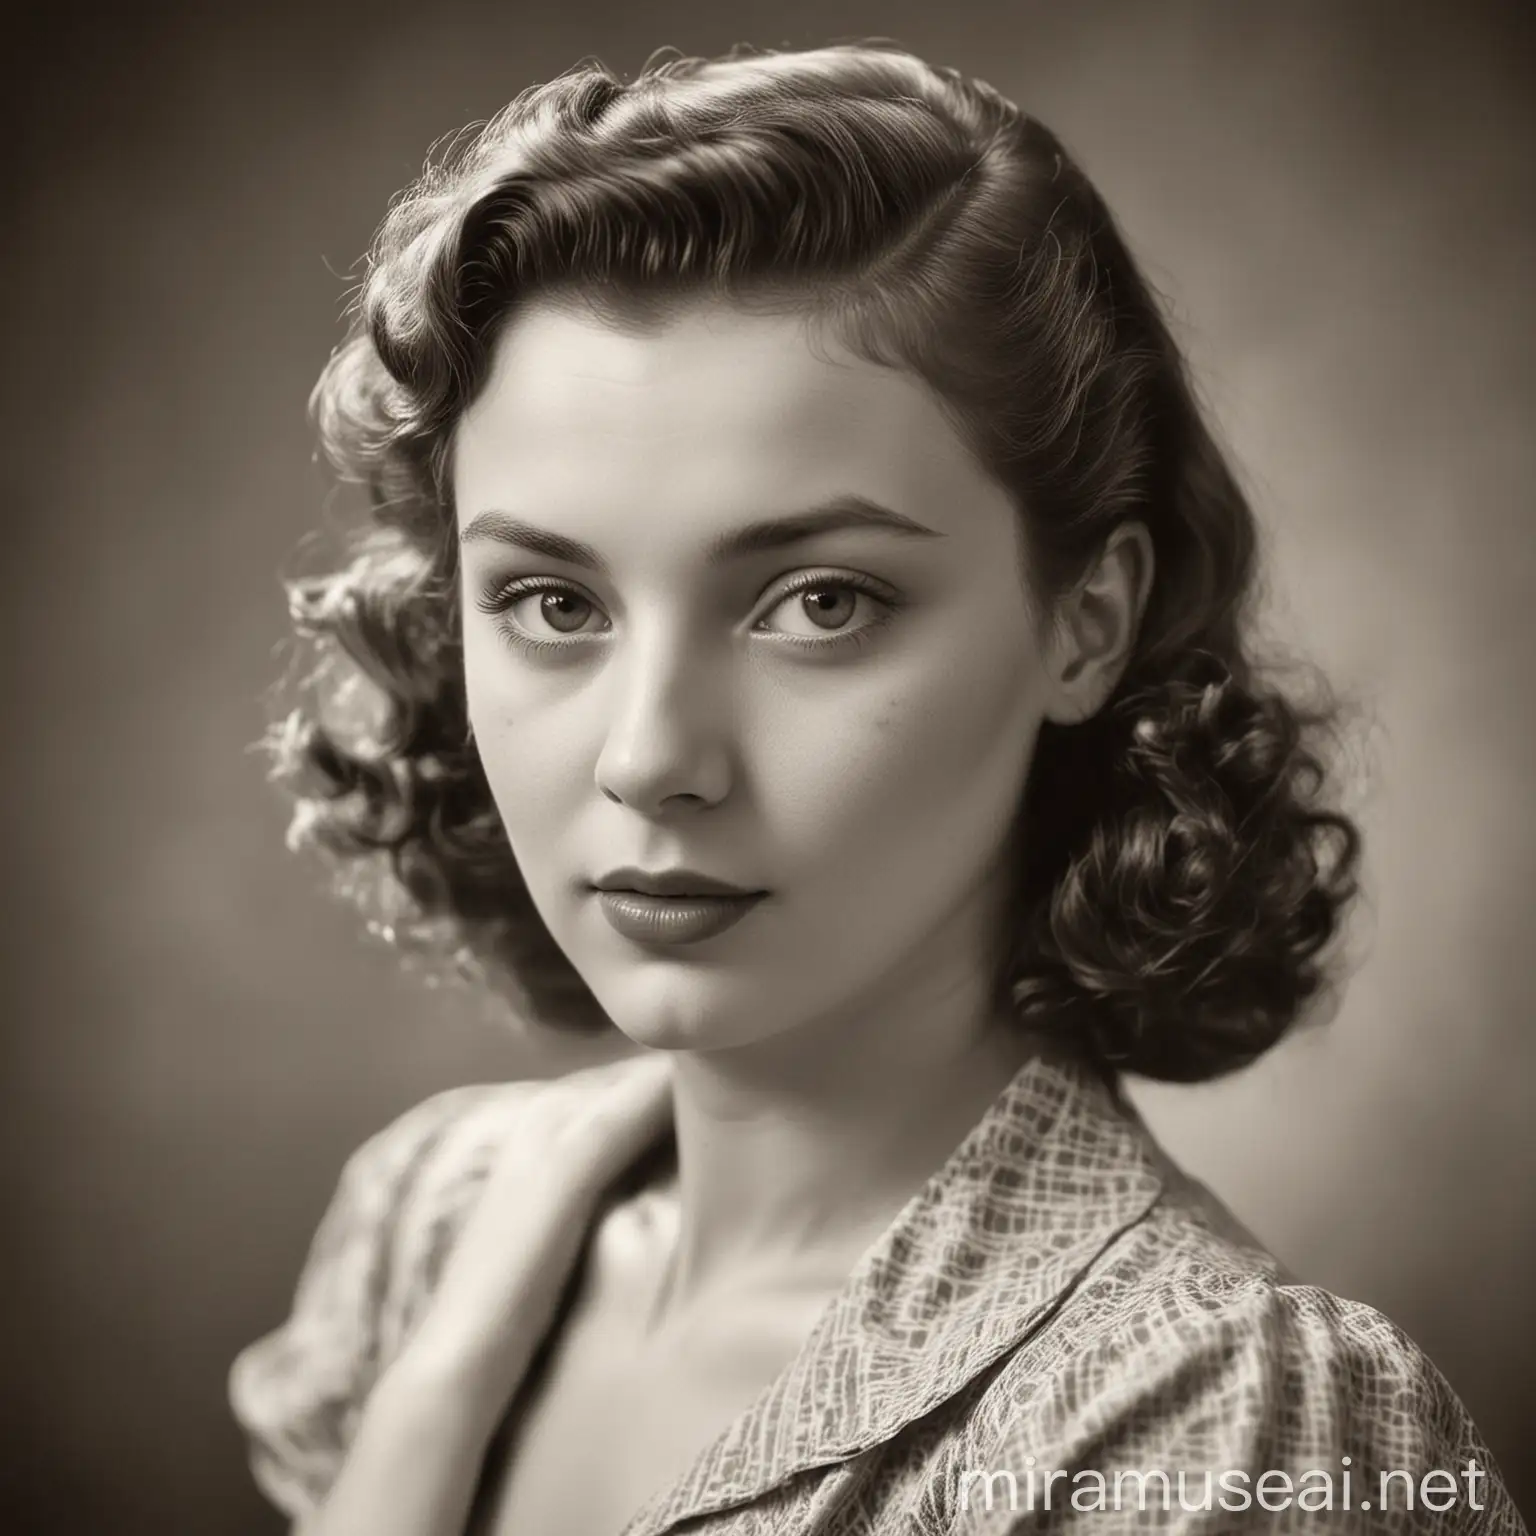 Elegant 1940s Woman Vintage Black and White Portrait